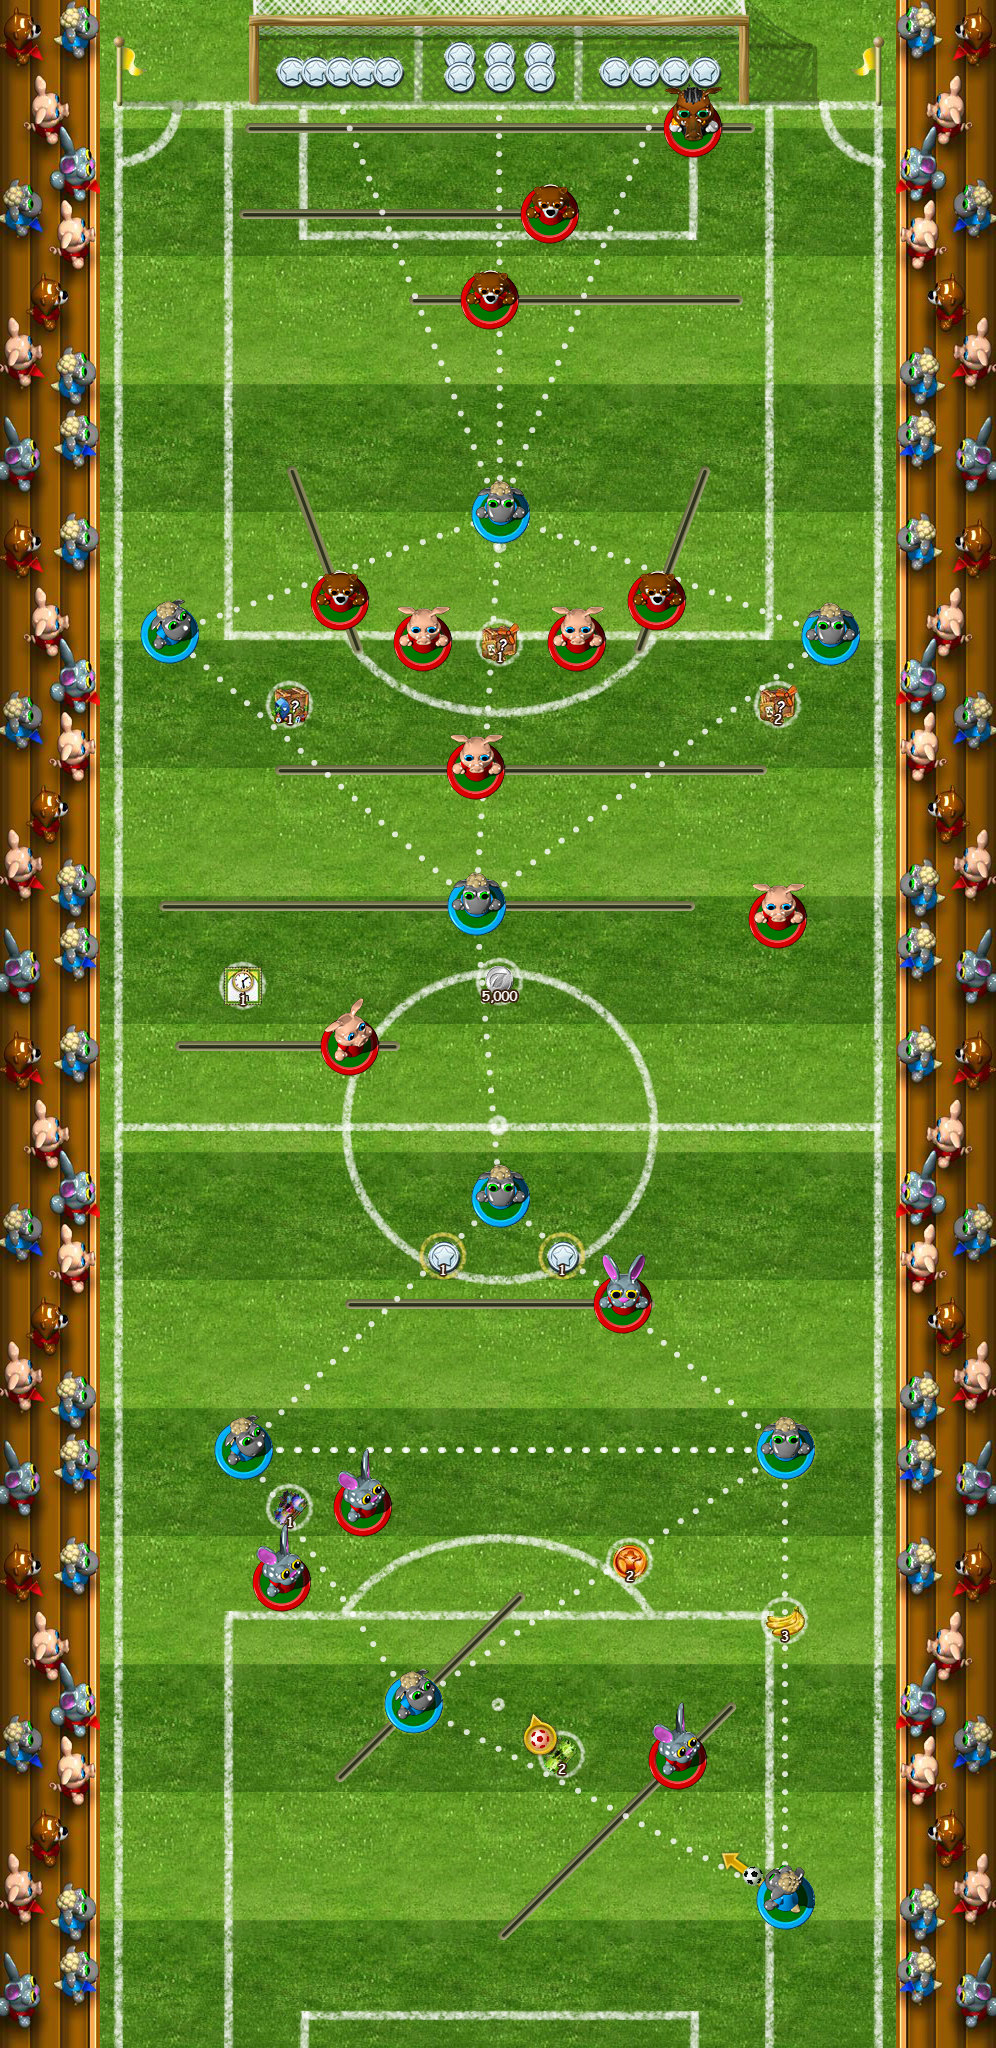 soccerjul2019_layout7.png